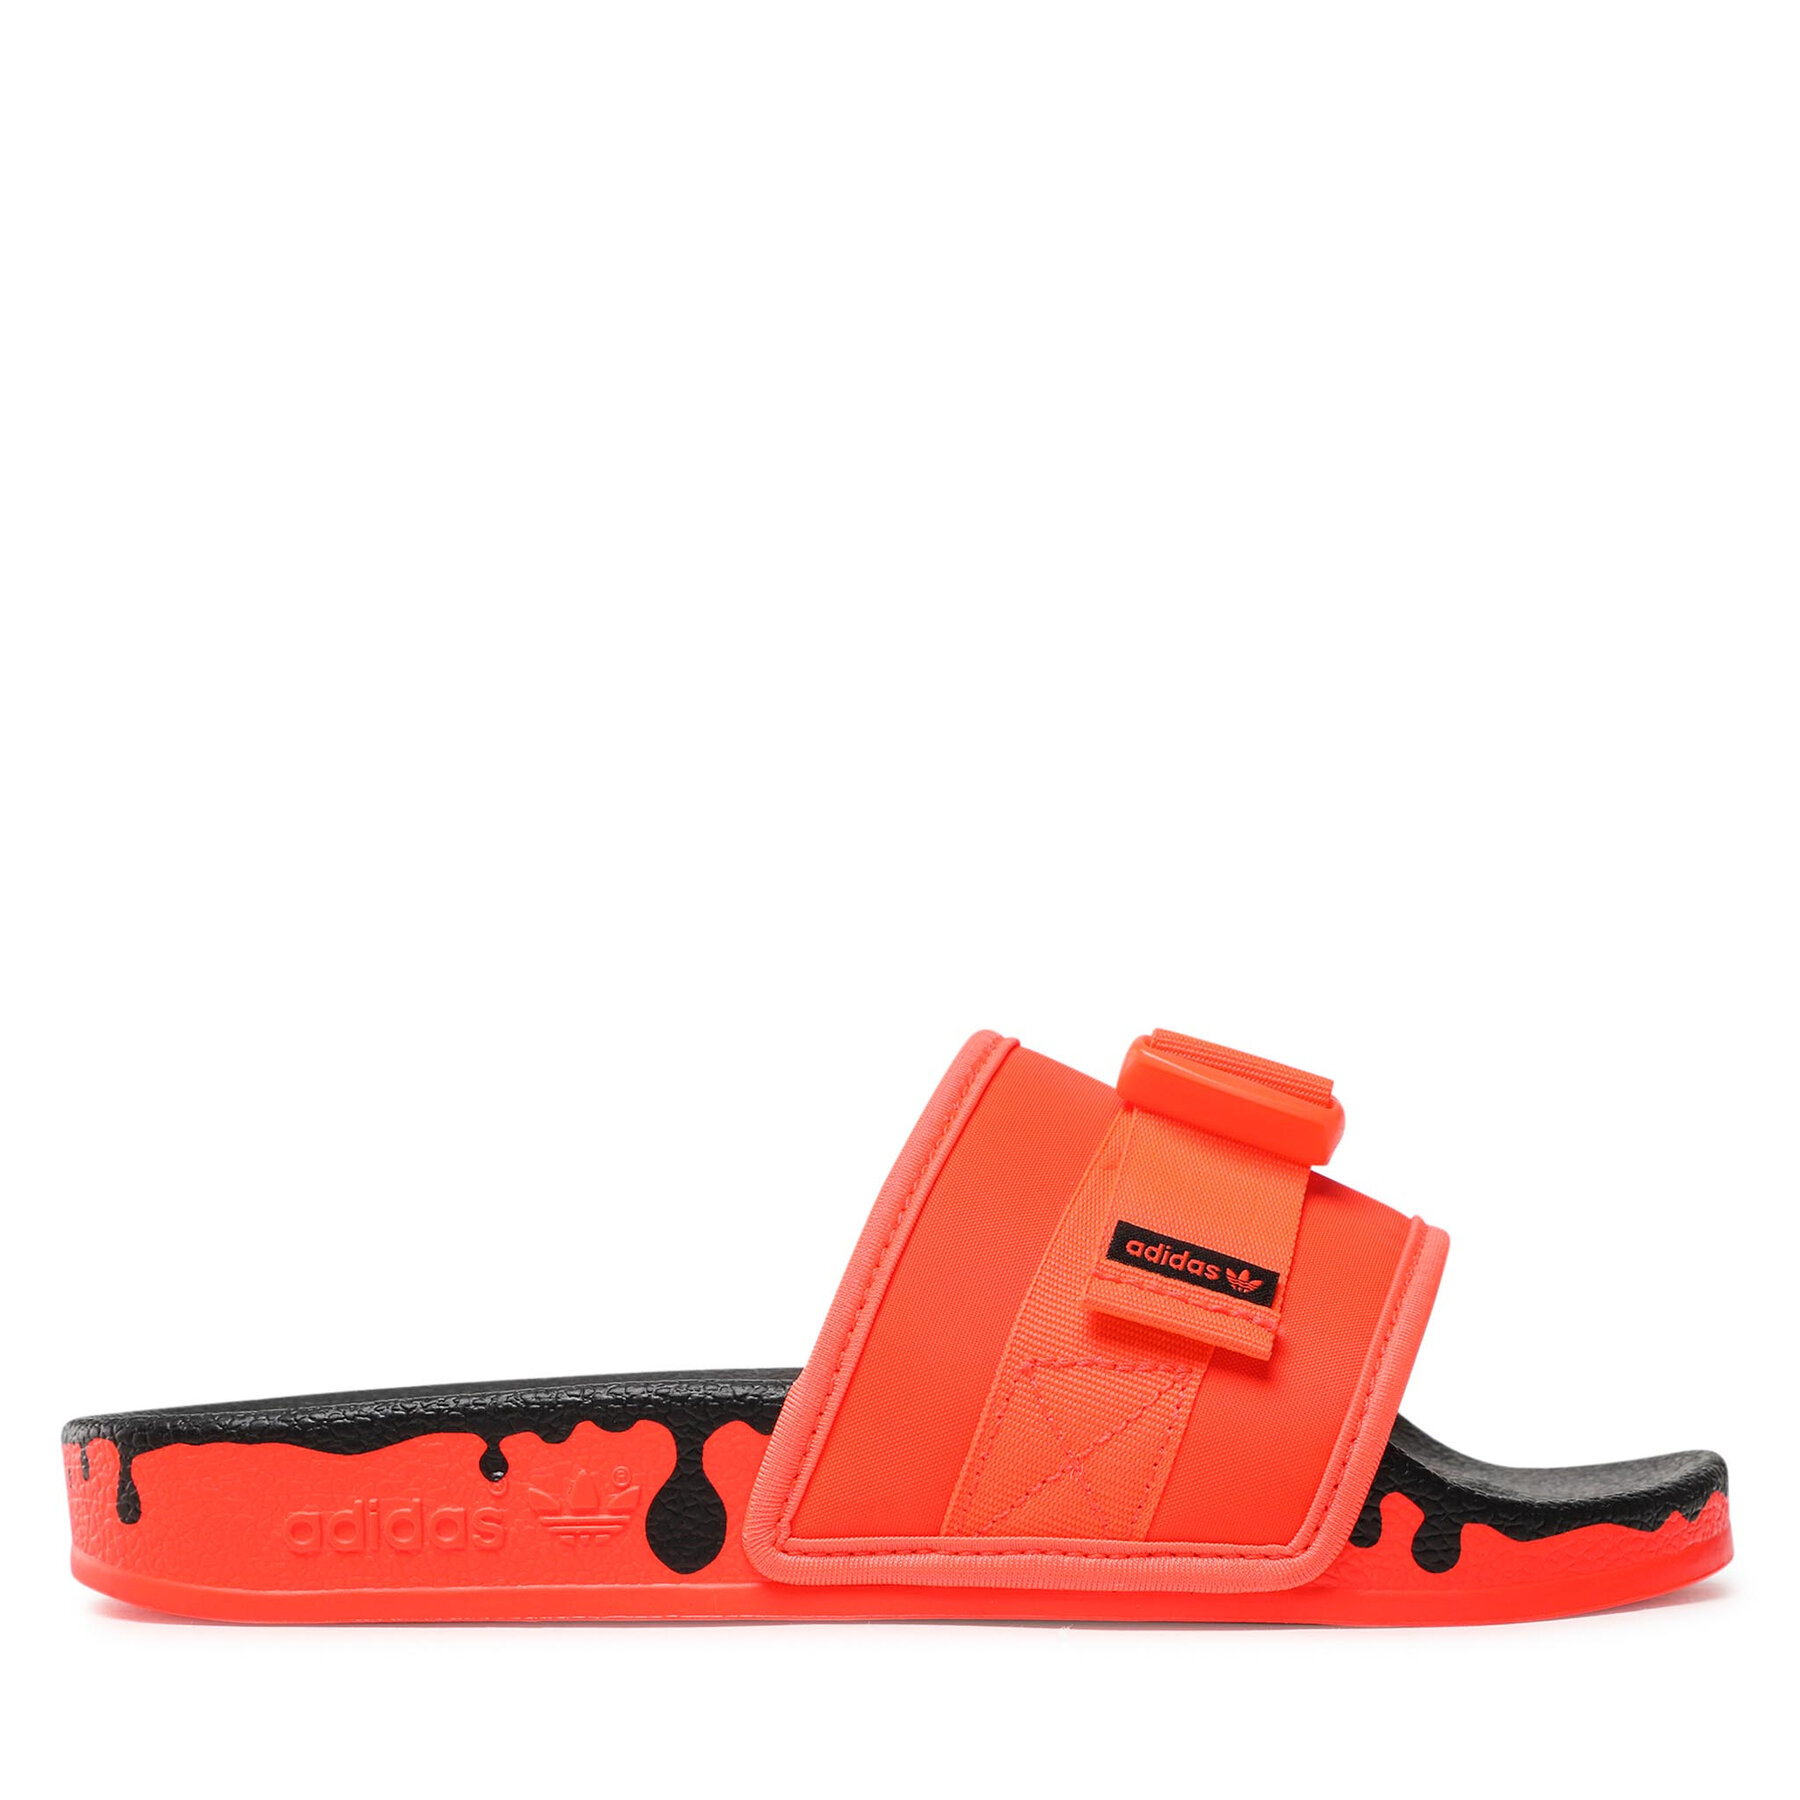 Comprar en oferta Adidas Pouchylette Slides (GY1009) Solar Red/Solar Red/Core Black